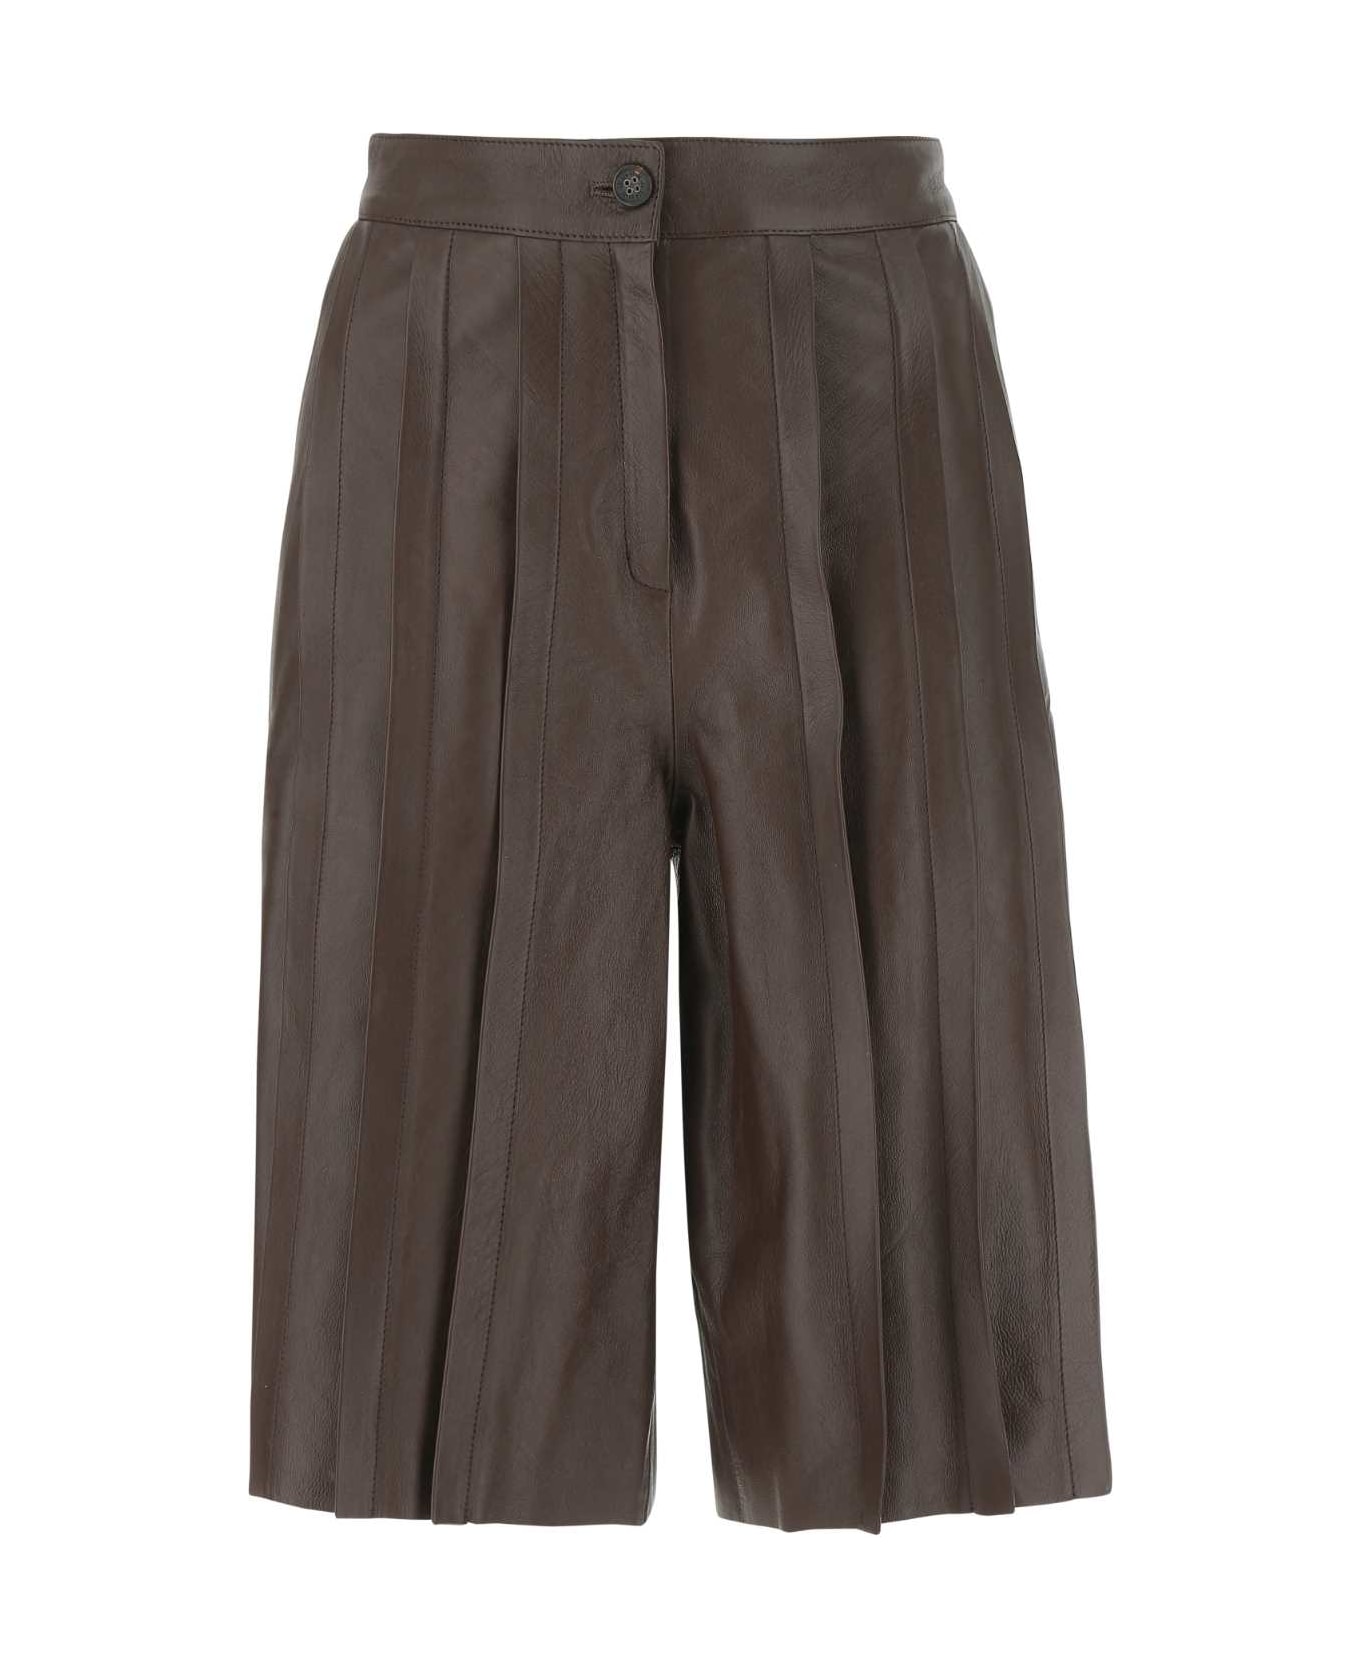 Golden Goose Brown Leather Bermuda Shorts - 55429 ボトムス